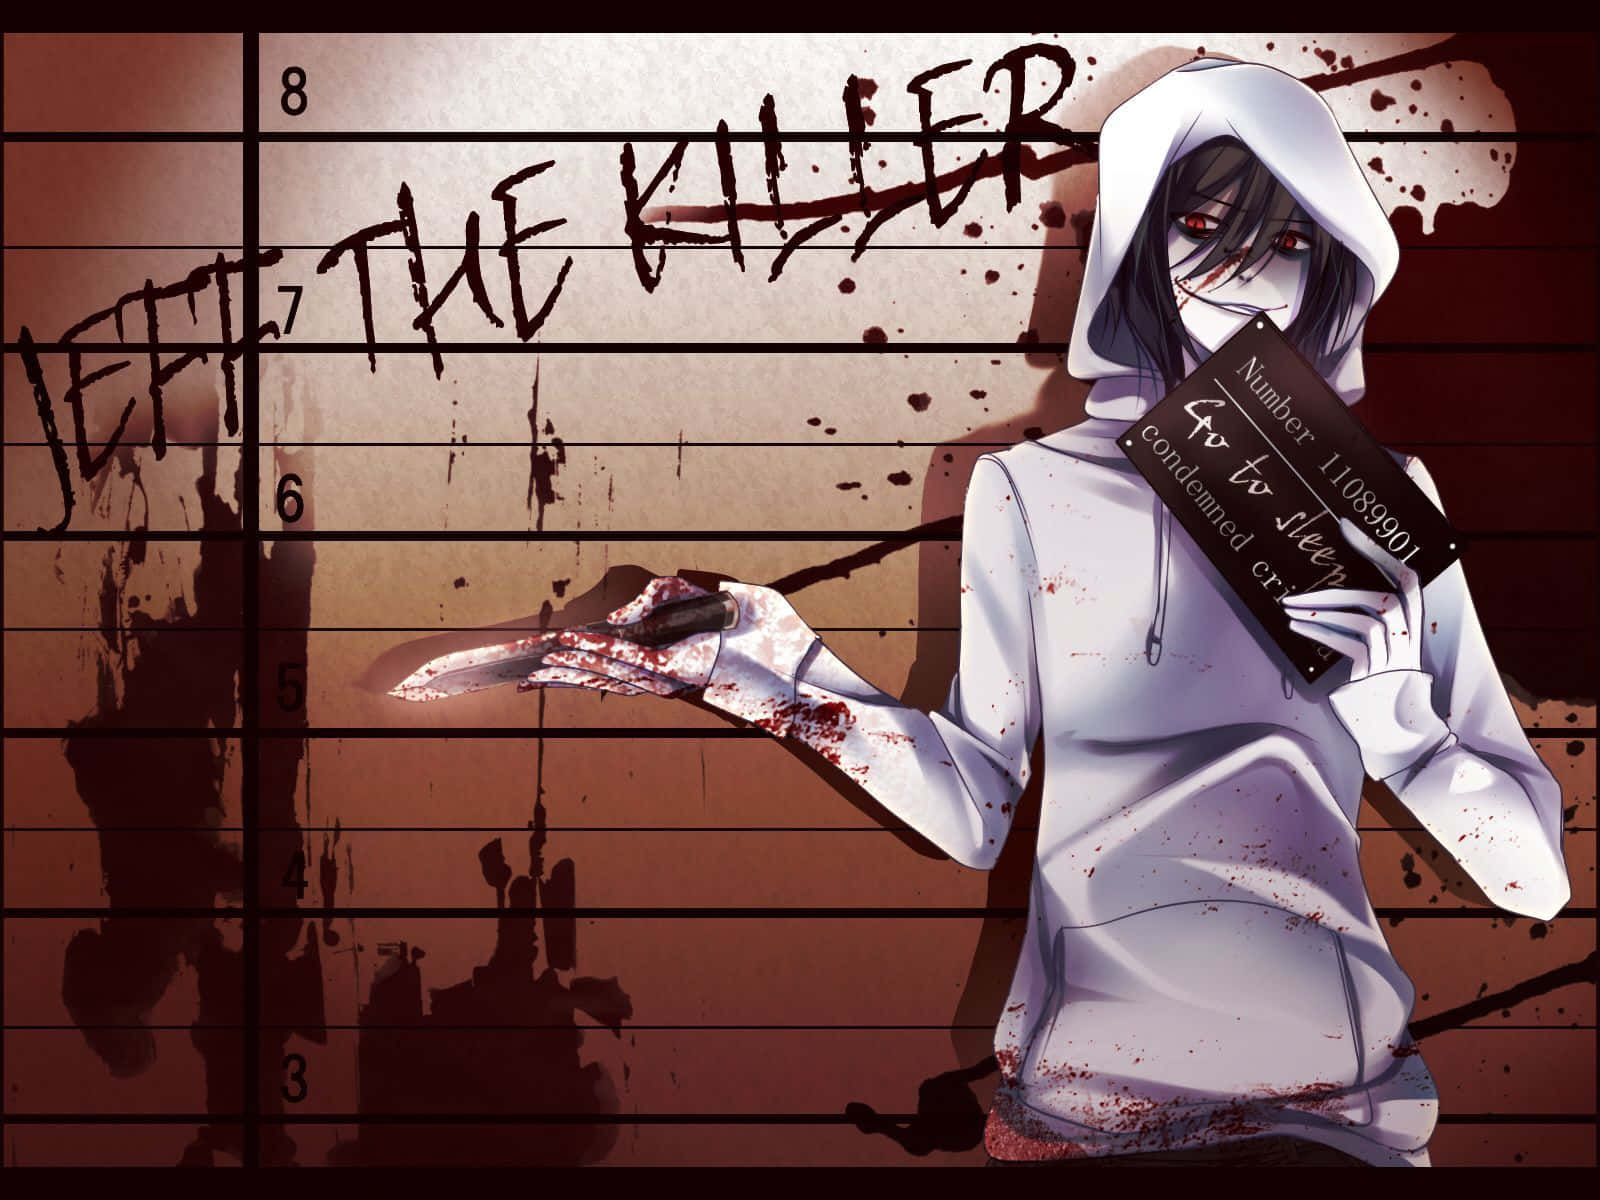 100+] Jeff The Killer Wallpapers